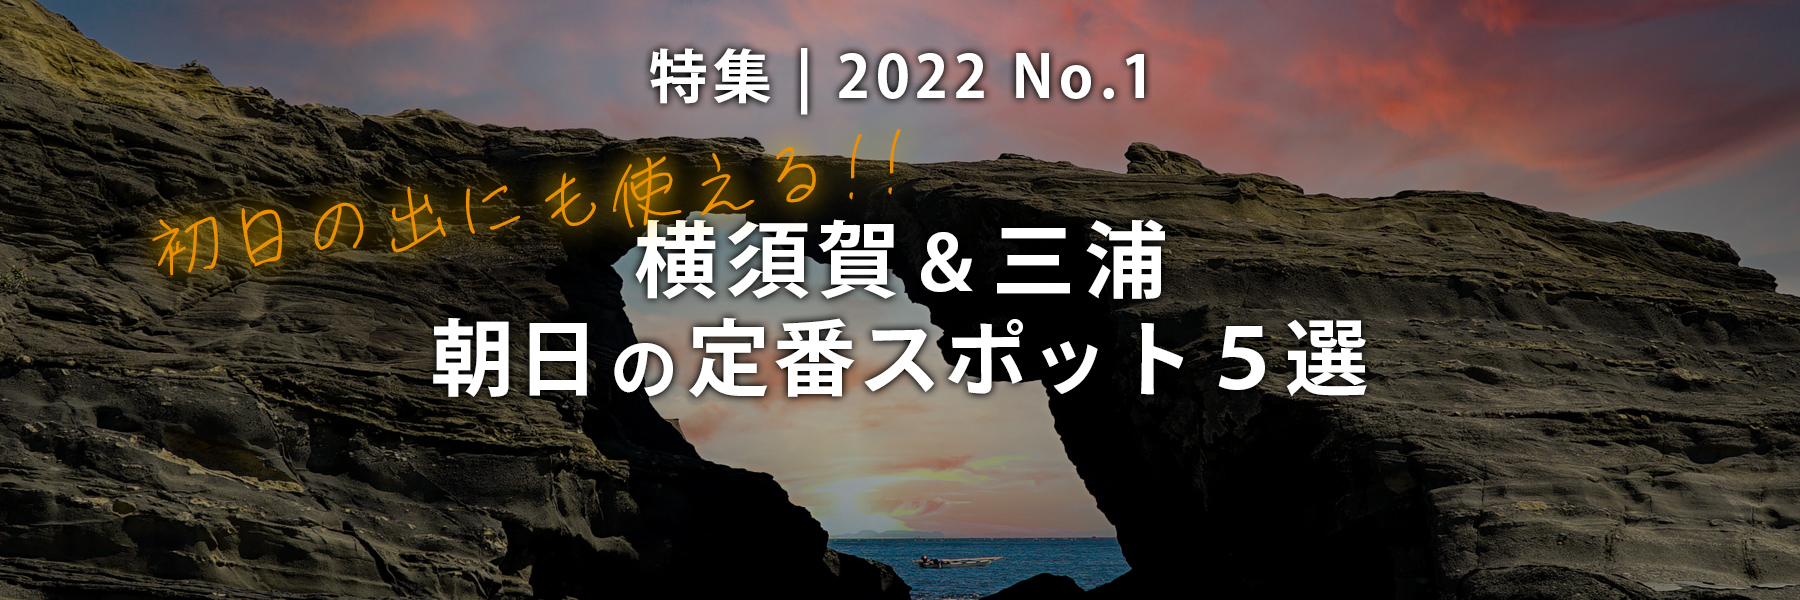 【2022 No.1】特集 | 初日の出にも使える!!横須賀＆三浦の朝日の定番スポット5選